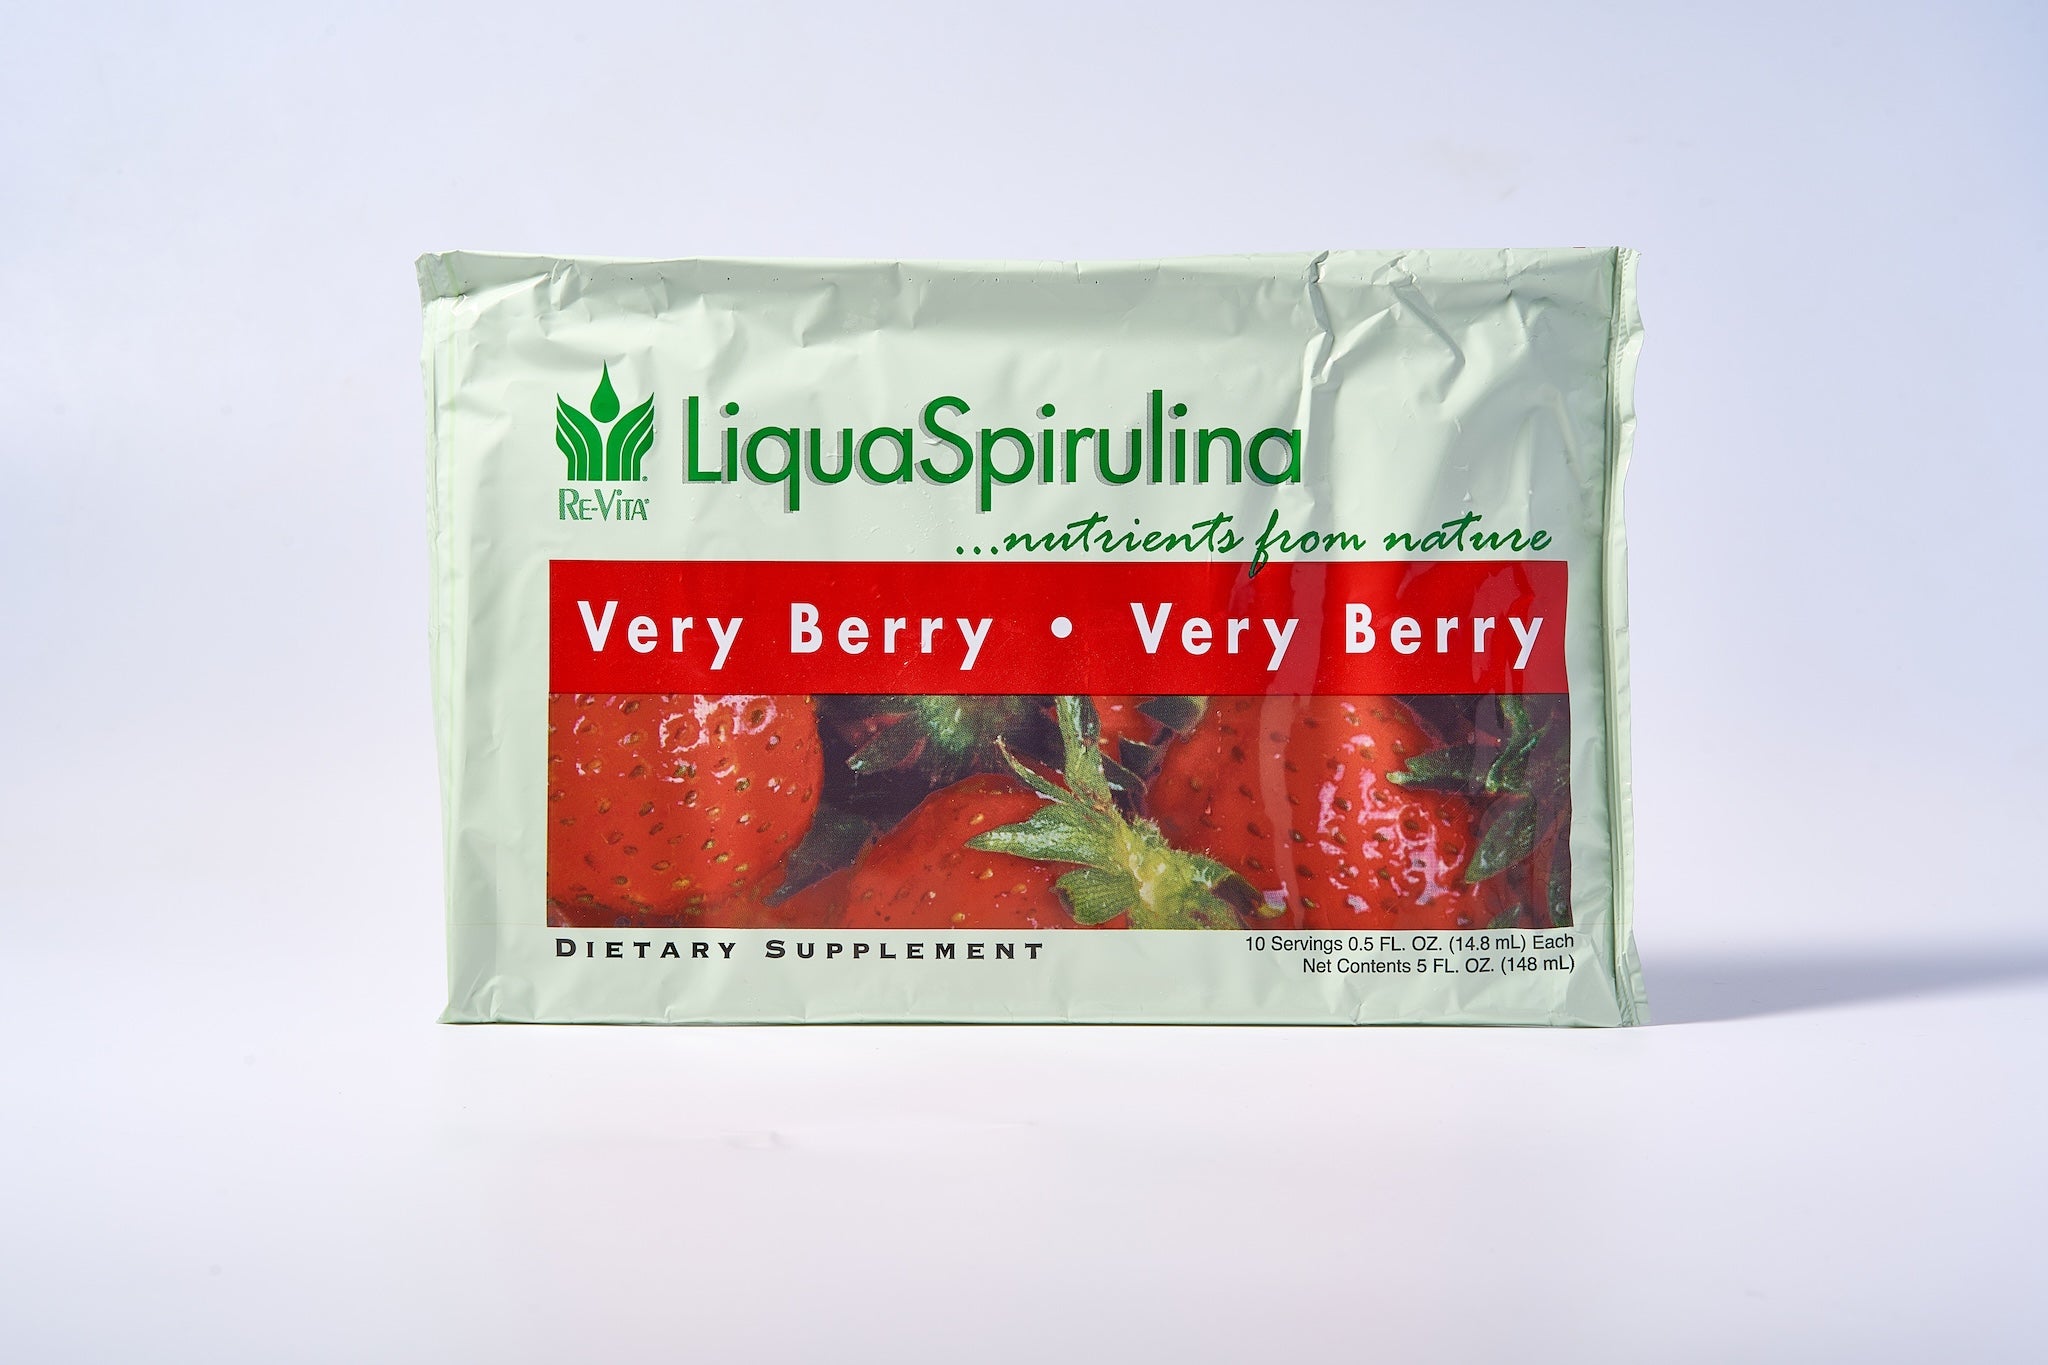 Very Berry LiquaSpirulina Smart Pack 190 Servings